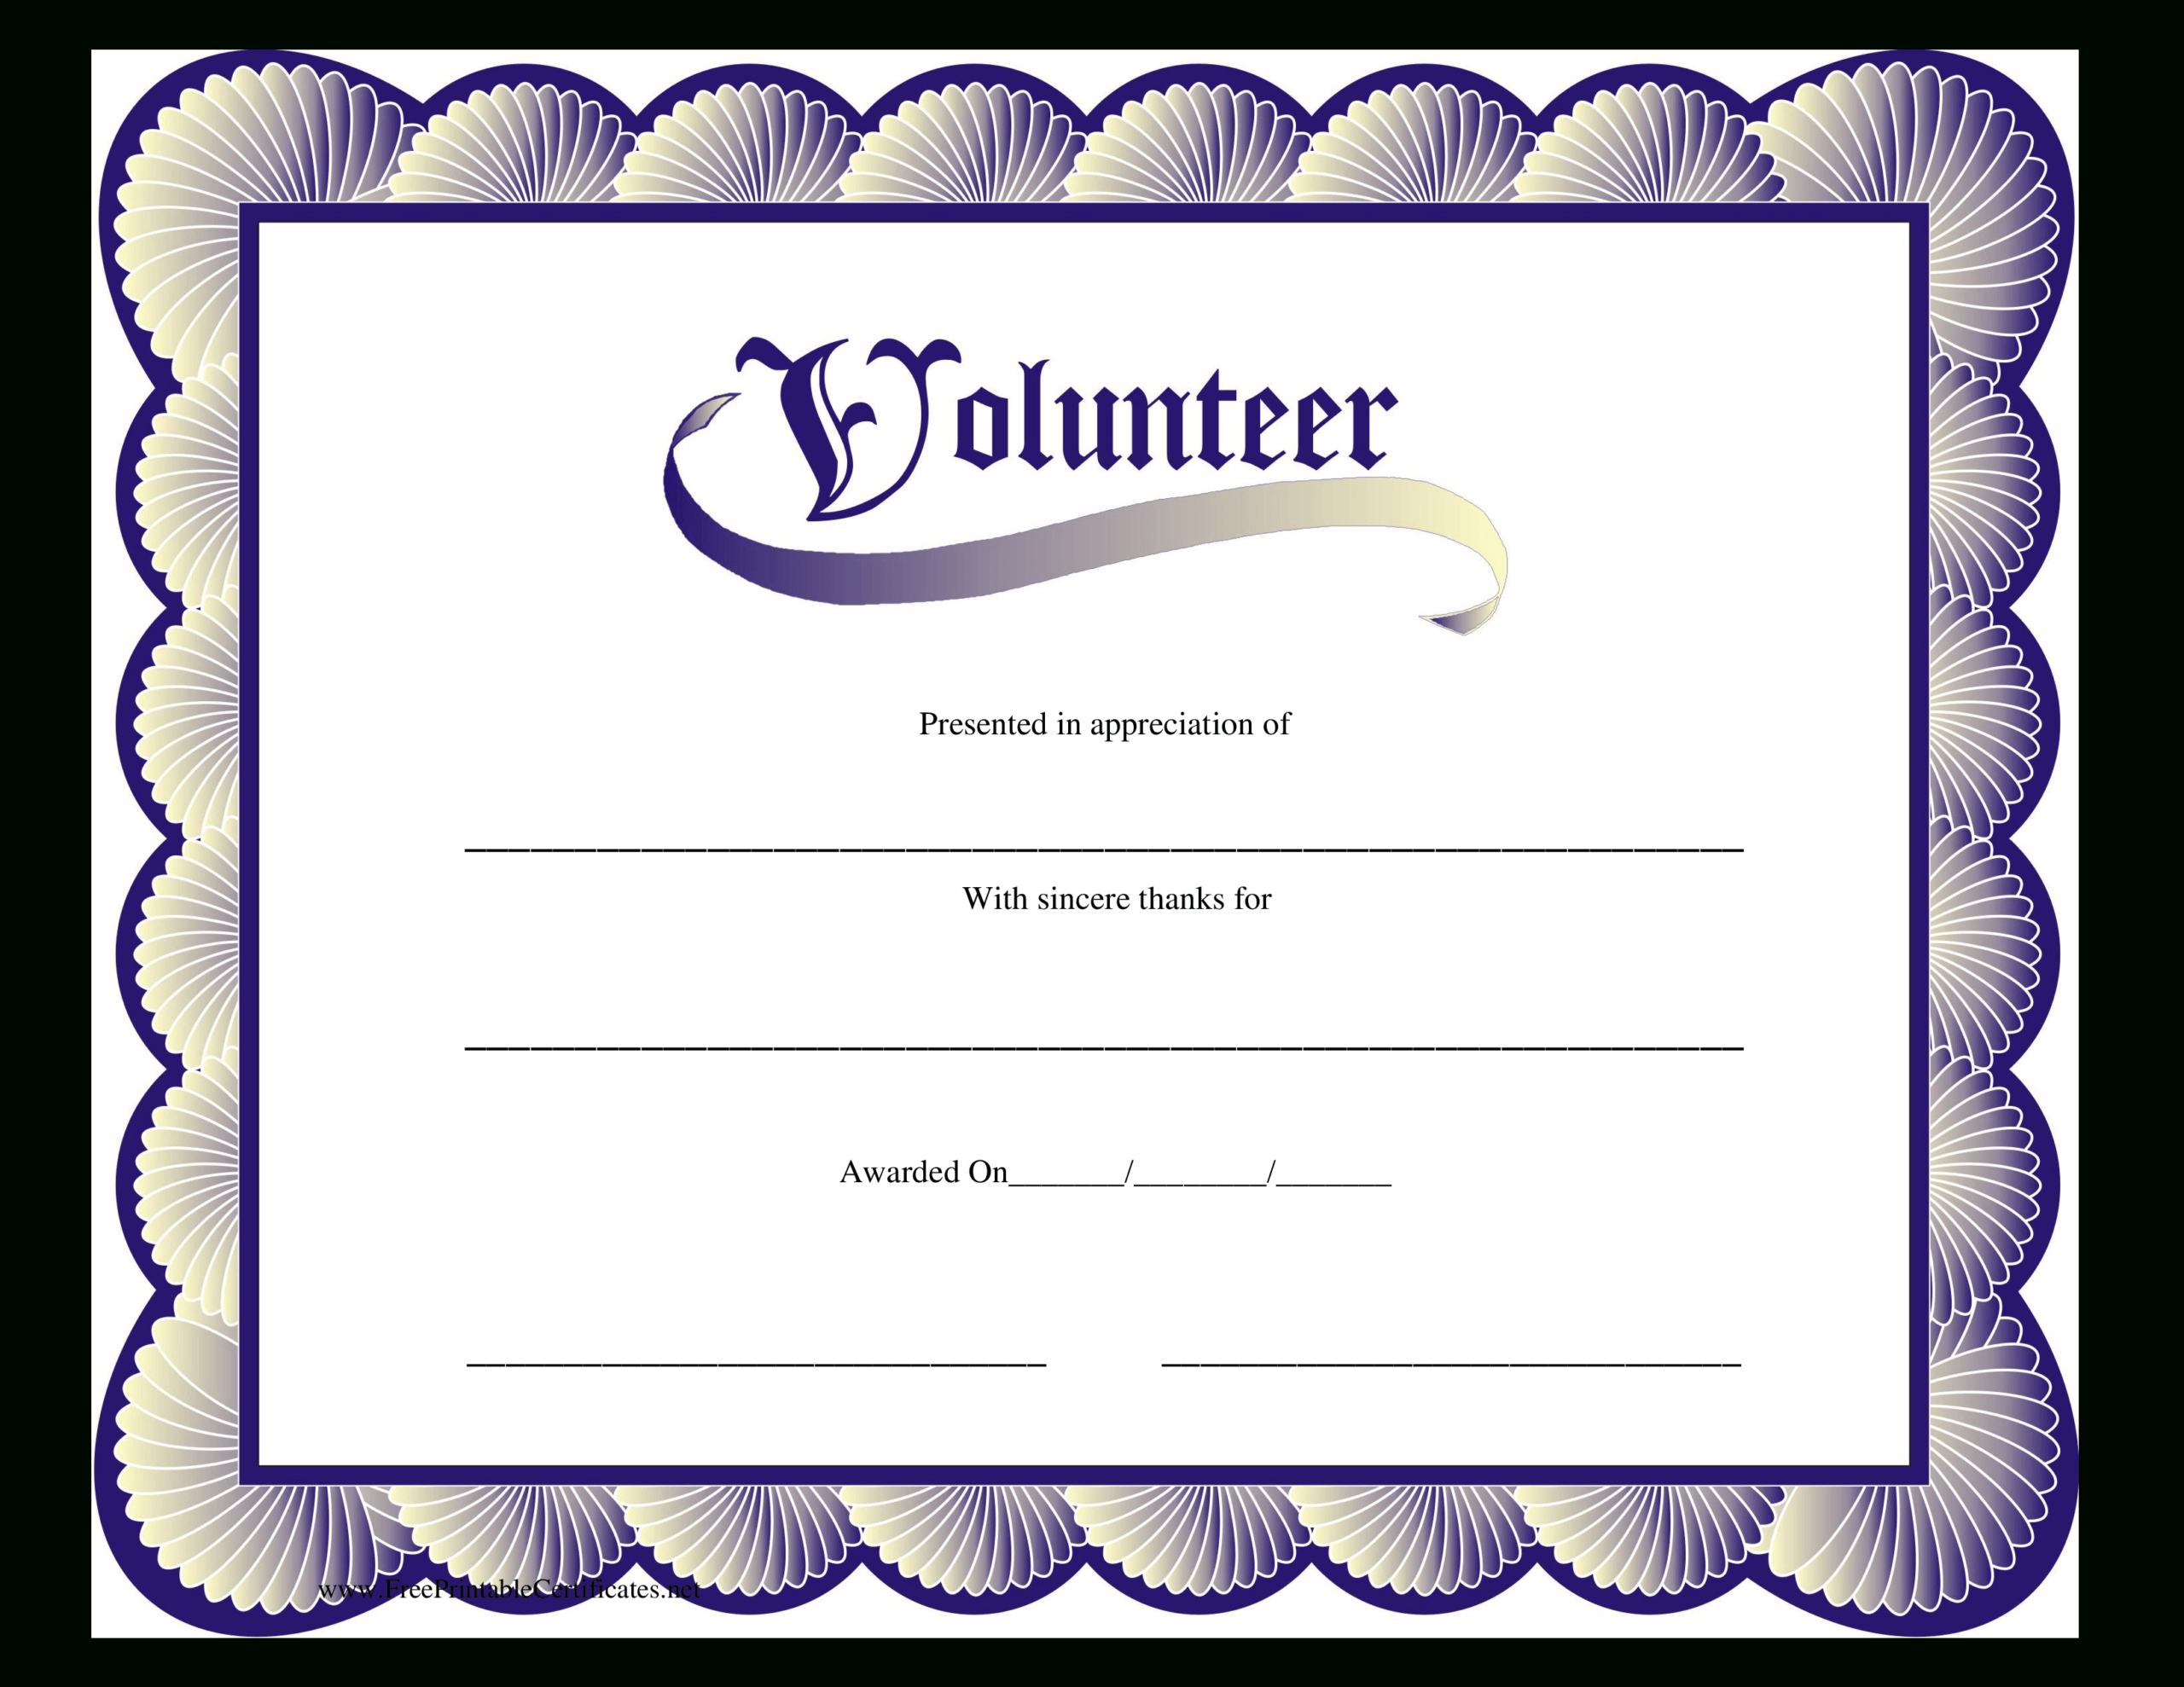 Volunteer Certificate | Templates At Allbusinesstemplates Regarding Volunteer Certificate Template